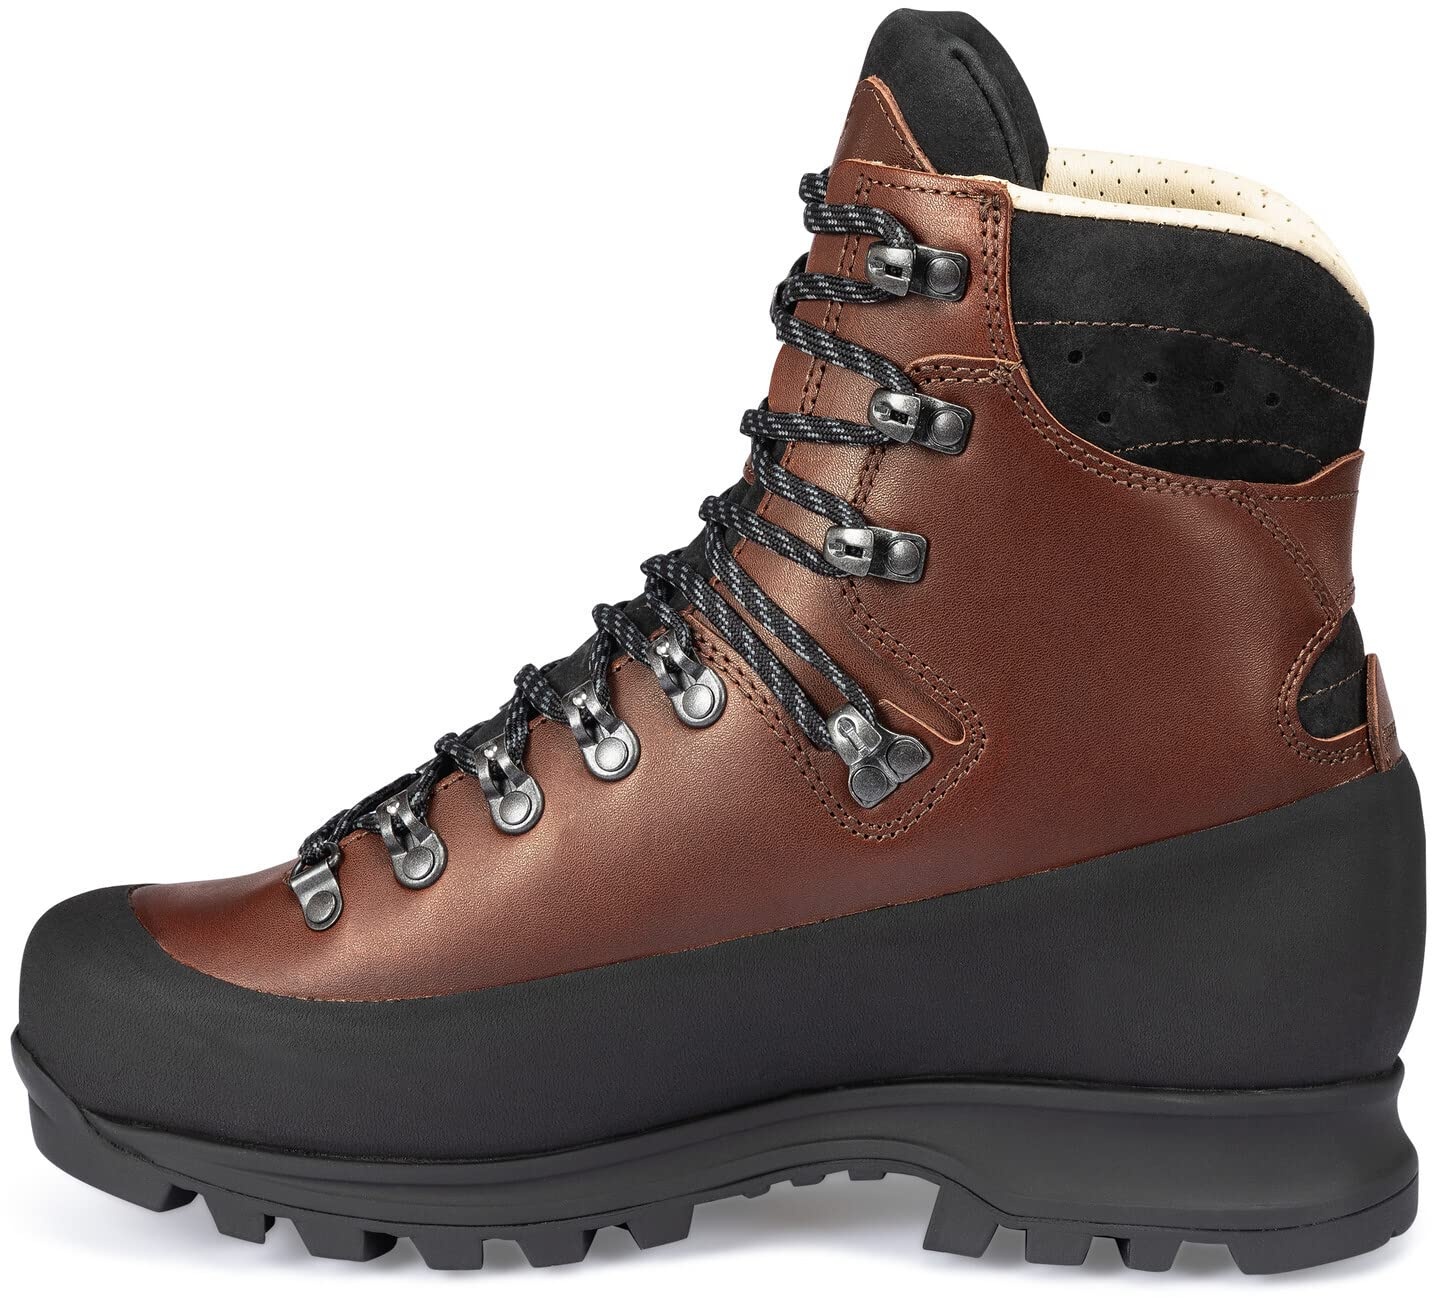 Hanwag Alaska Pro Wide GTX Schuhe Herren braun/schwarz - 46.5 EU